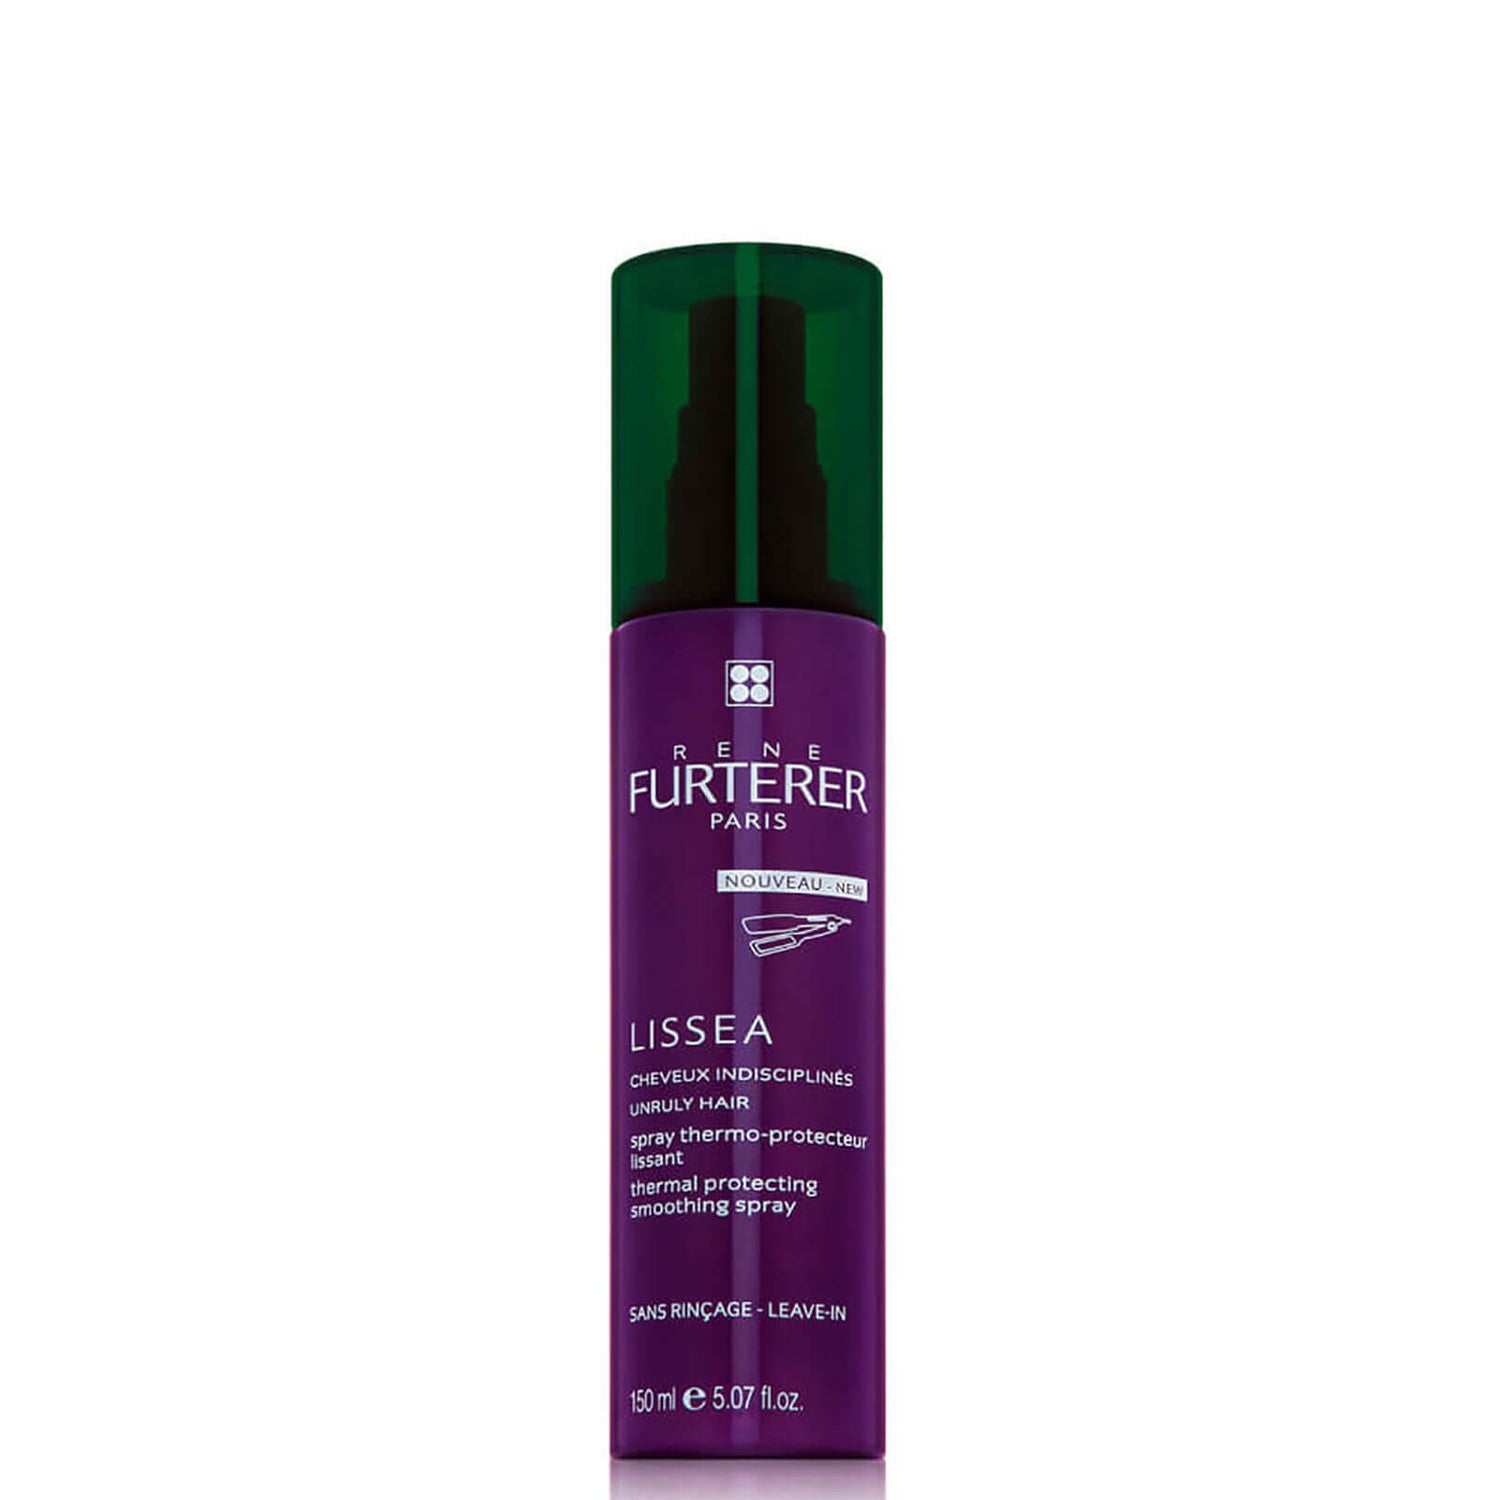 René Furterer Lissea Thermal Protecting Smoothing Spray (5.07 fl. oz.)